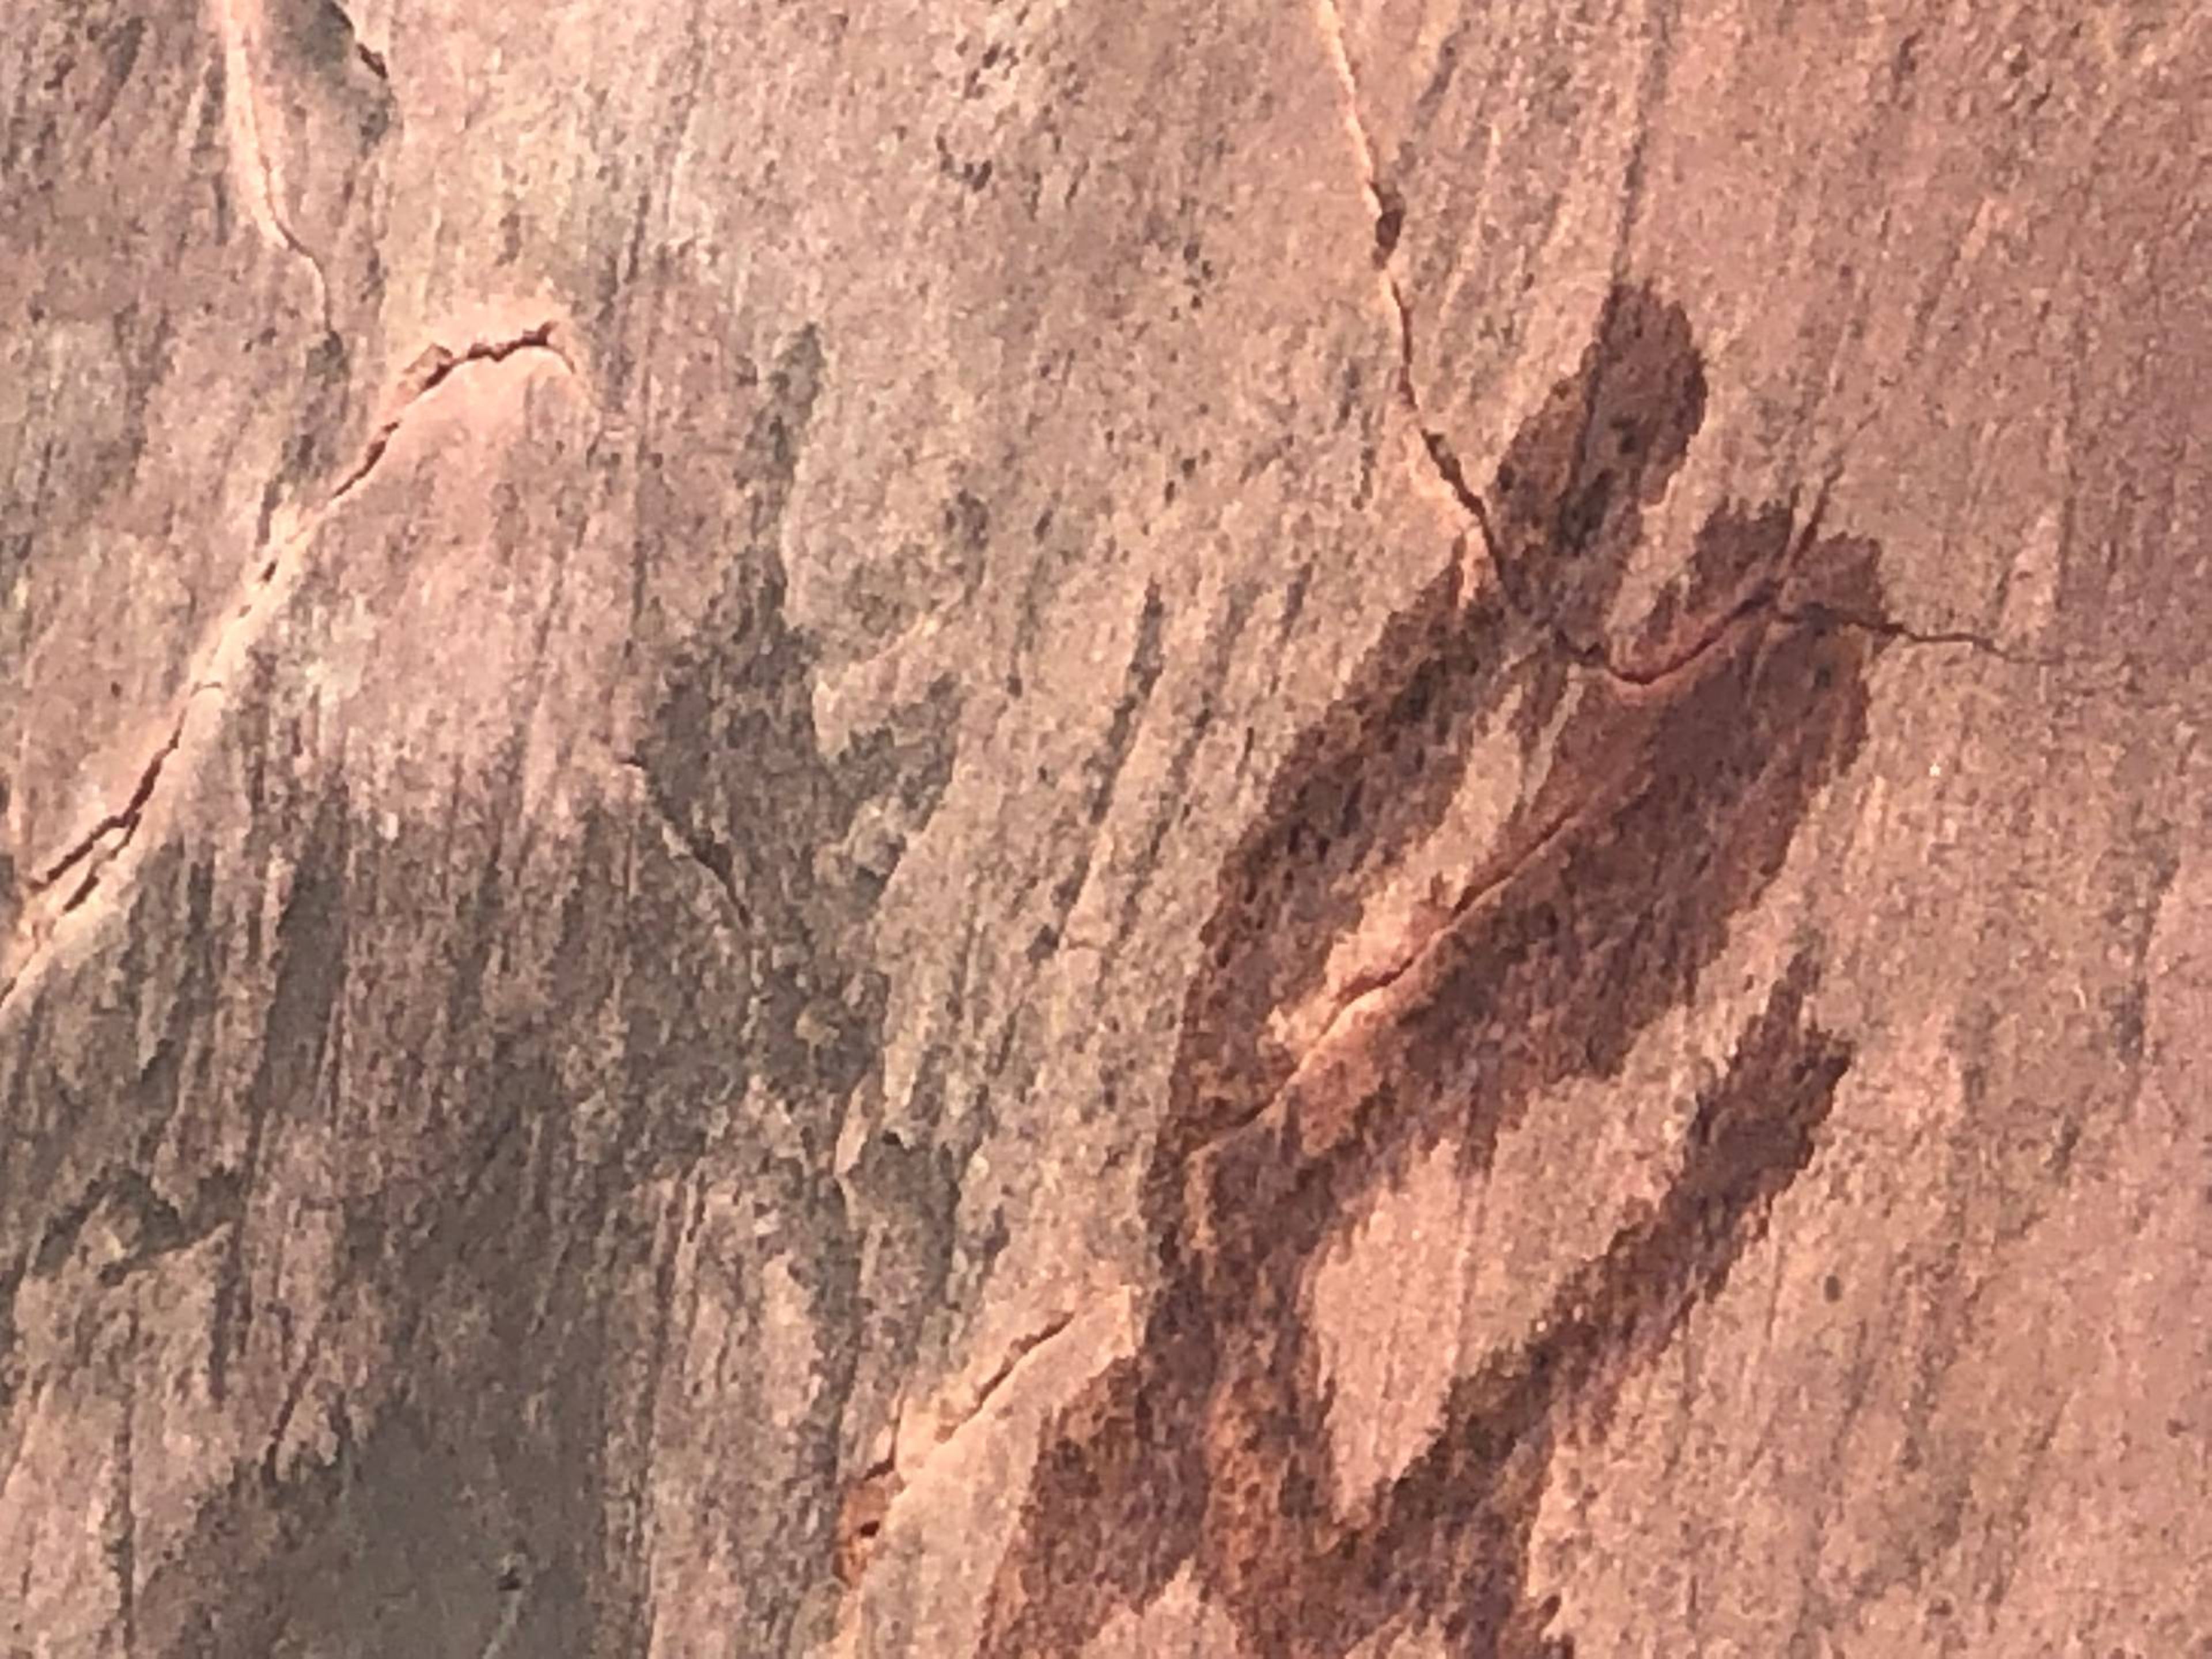 Eagle or thunderbird petroglyph carving